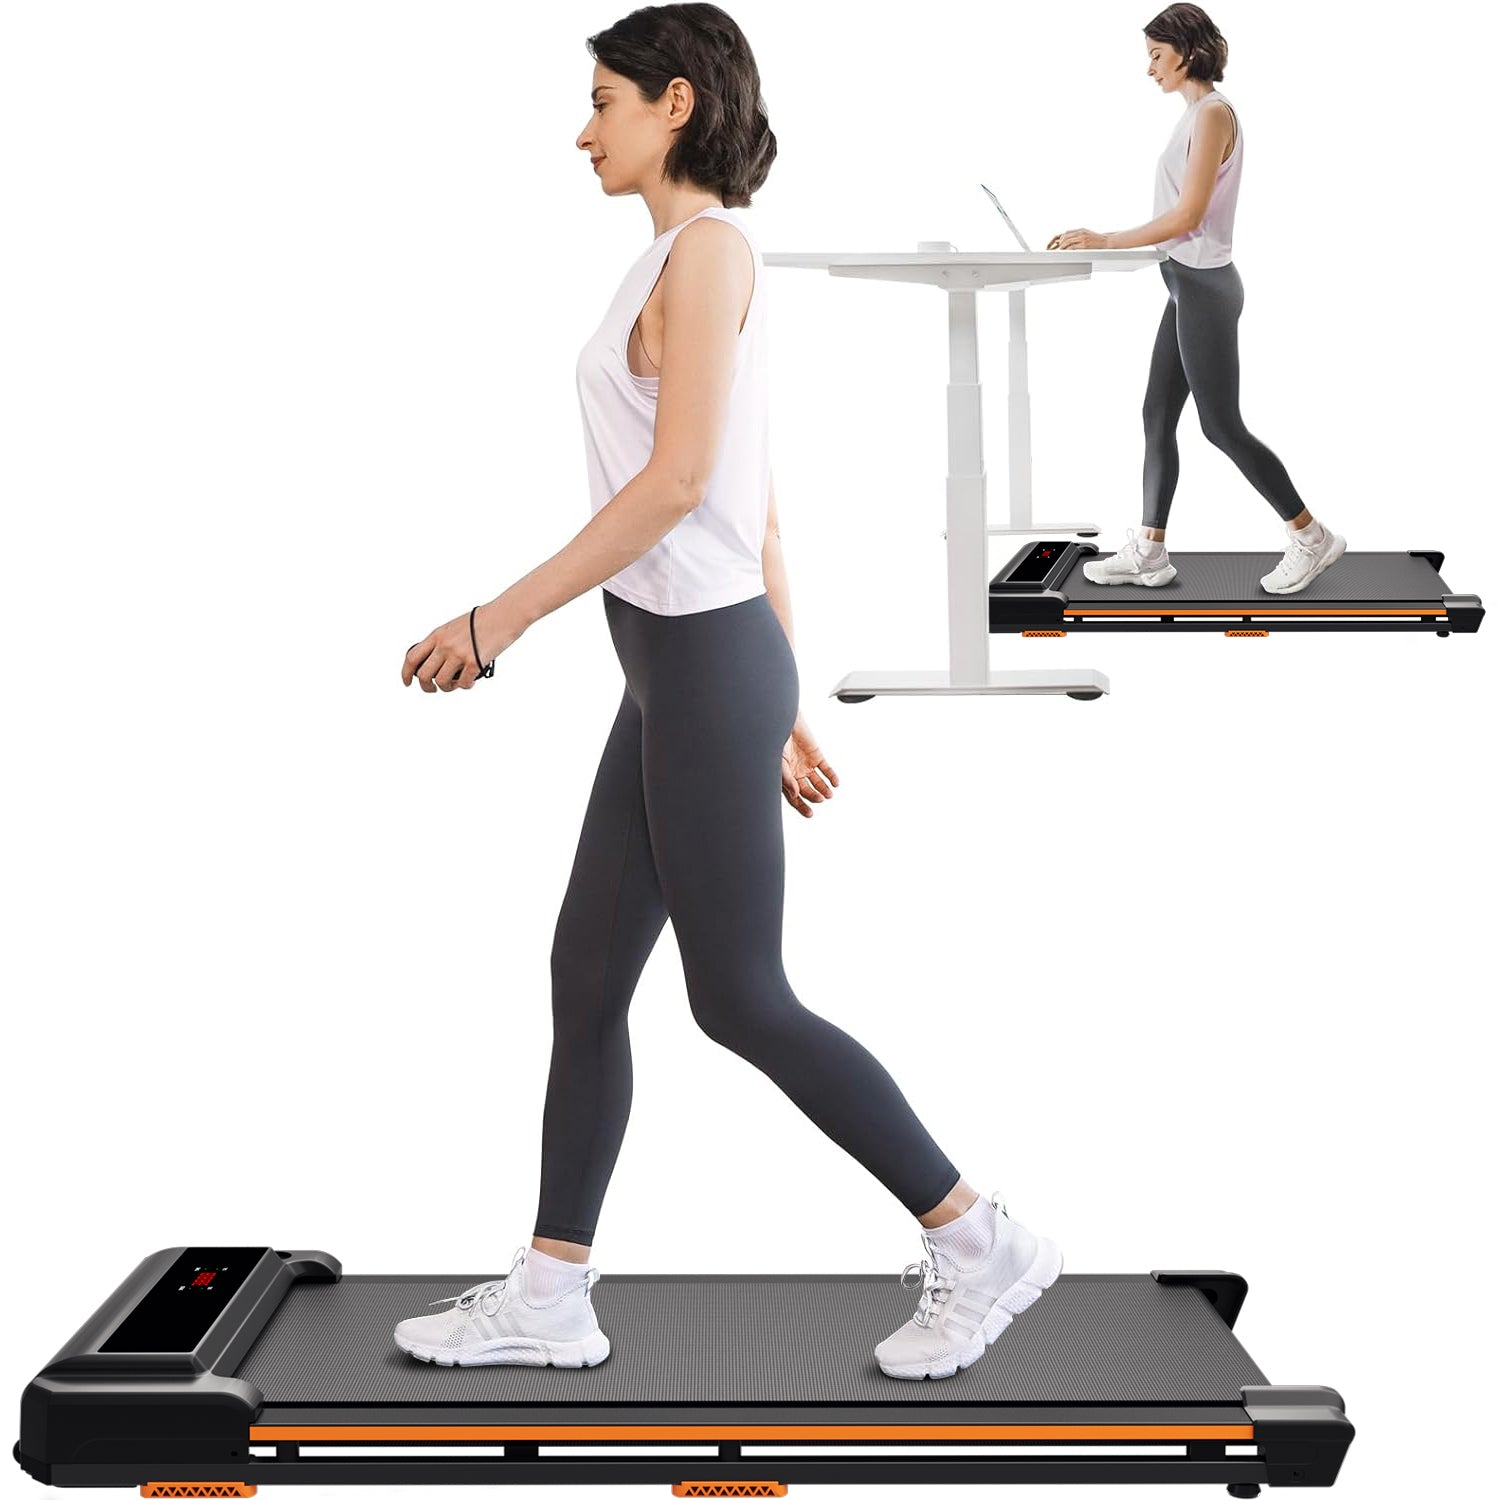 AirHot Walking Pad Laufband 0.6-3.7MPH Walking Jogging Machine für Home Office mit Klappoption